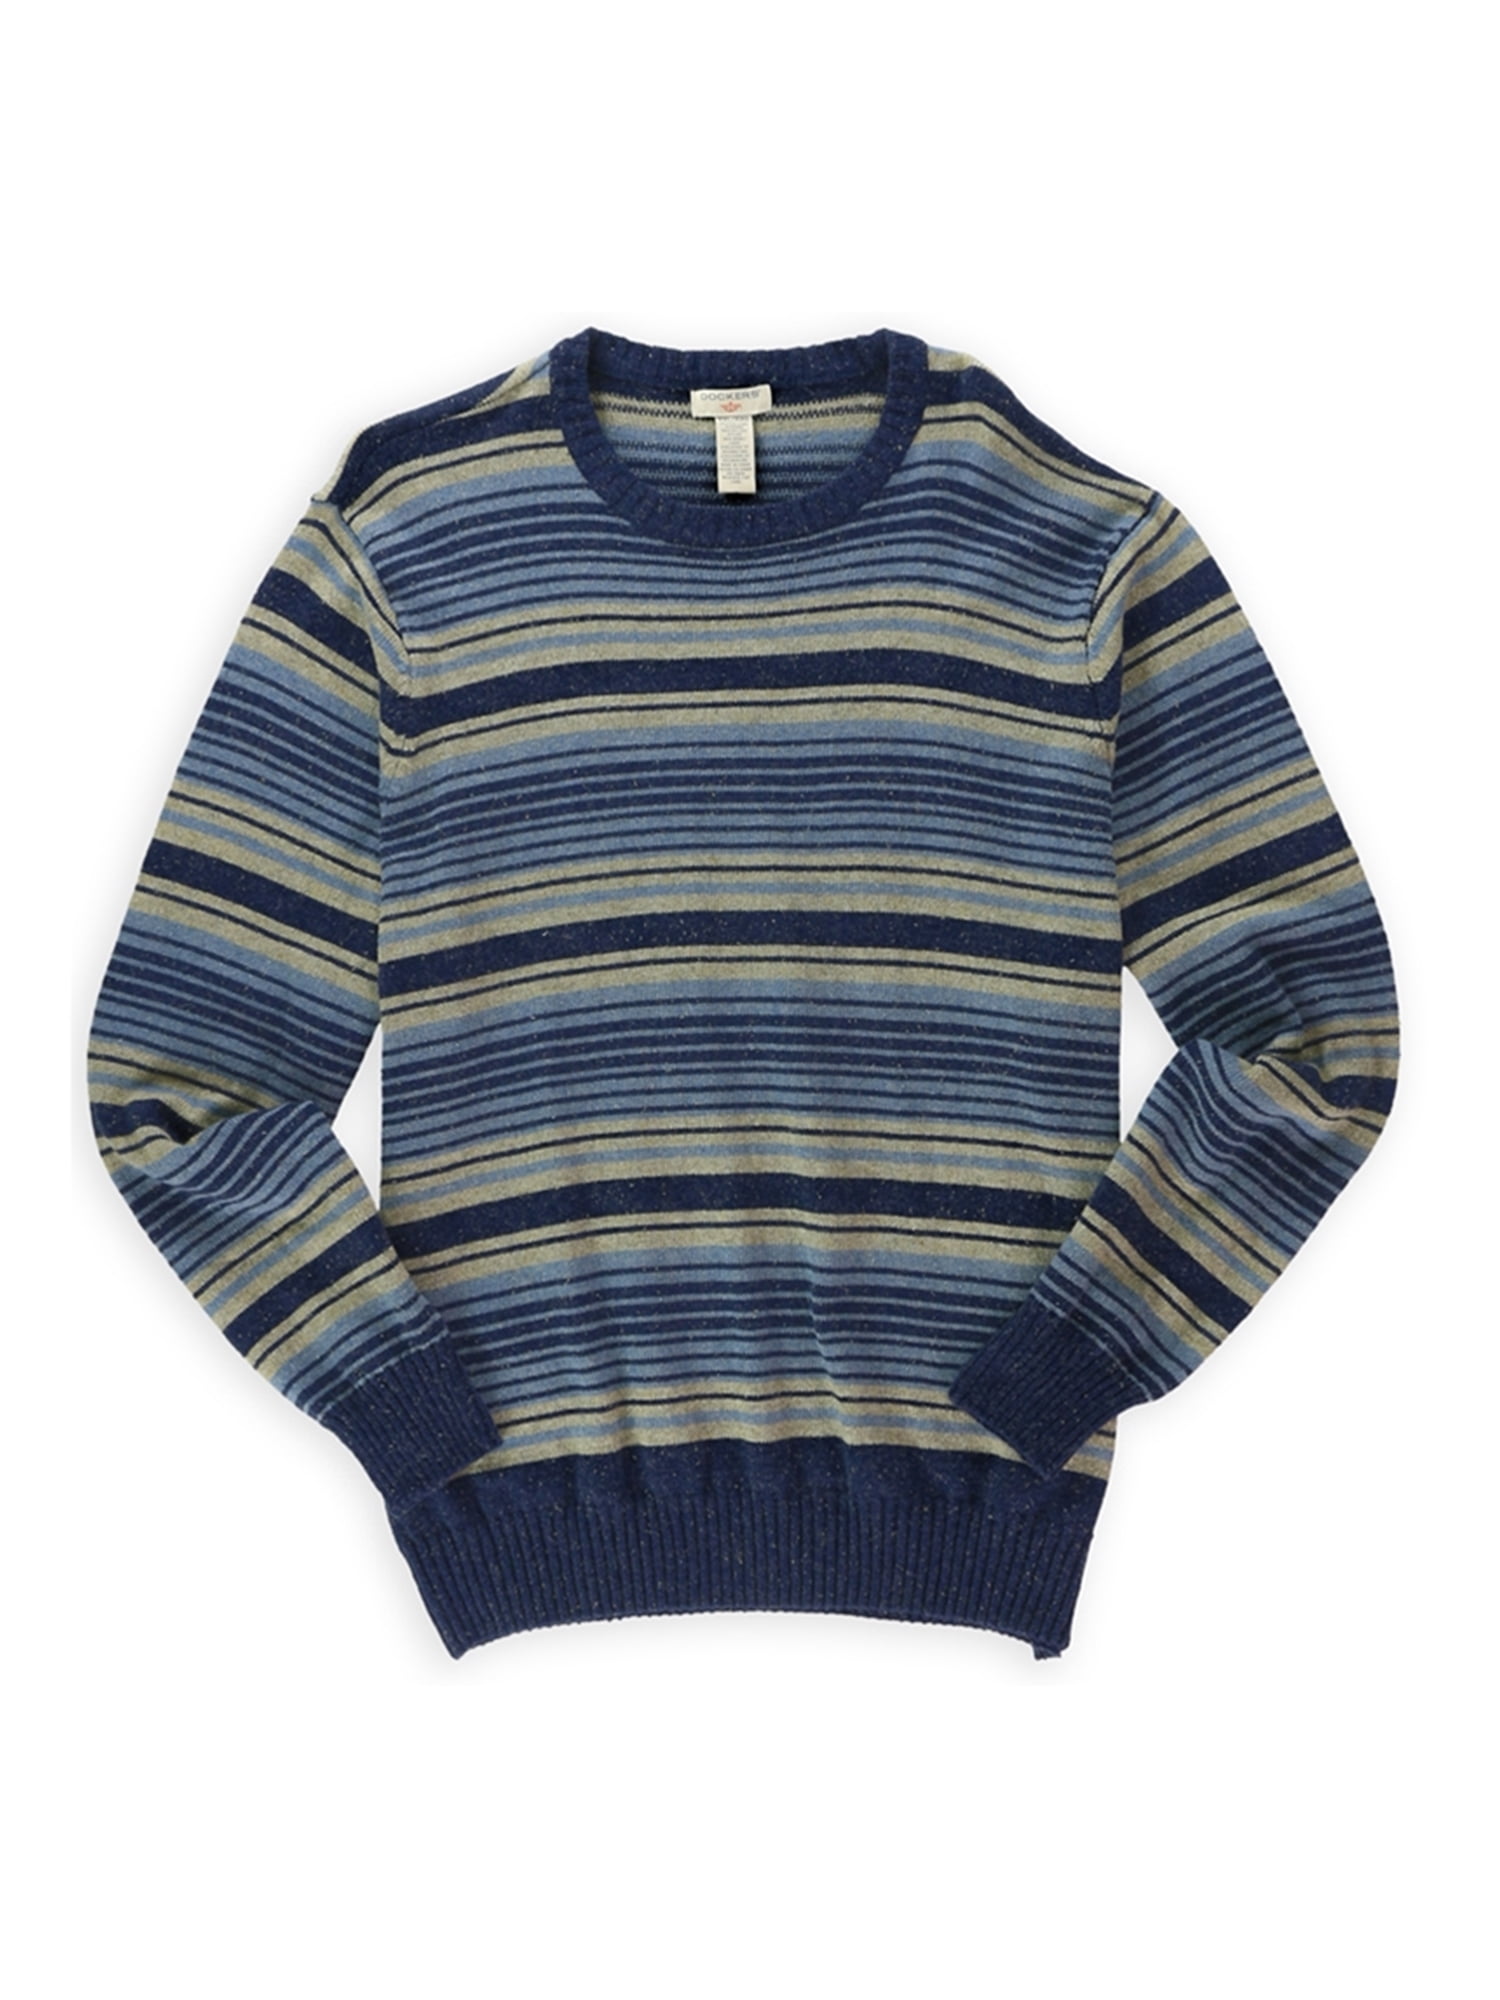 Dockers Mens Multi Stripe Pullover Sweater seacptbl 2XL | Walmart Canada